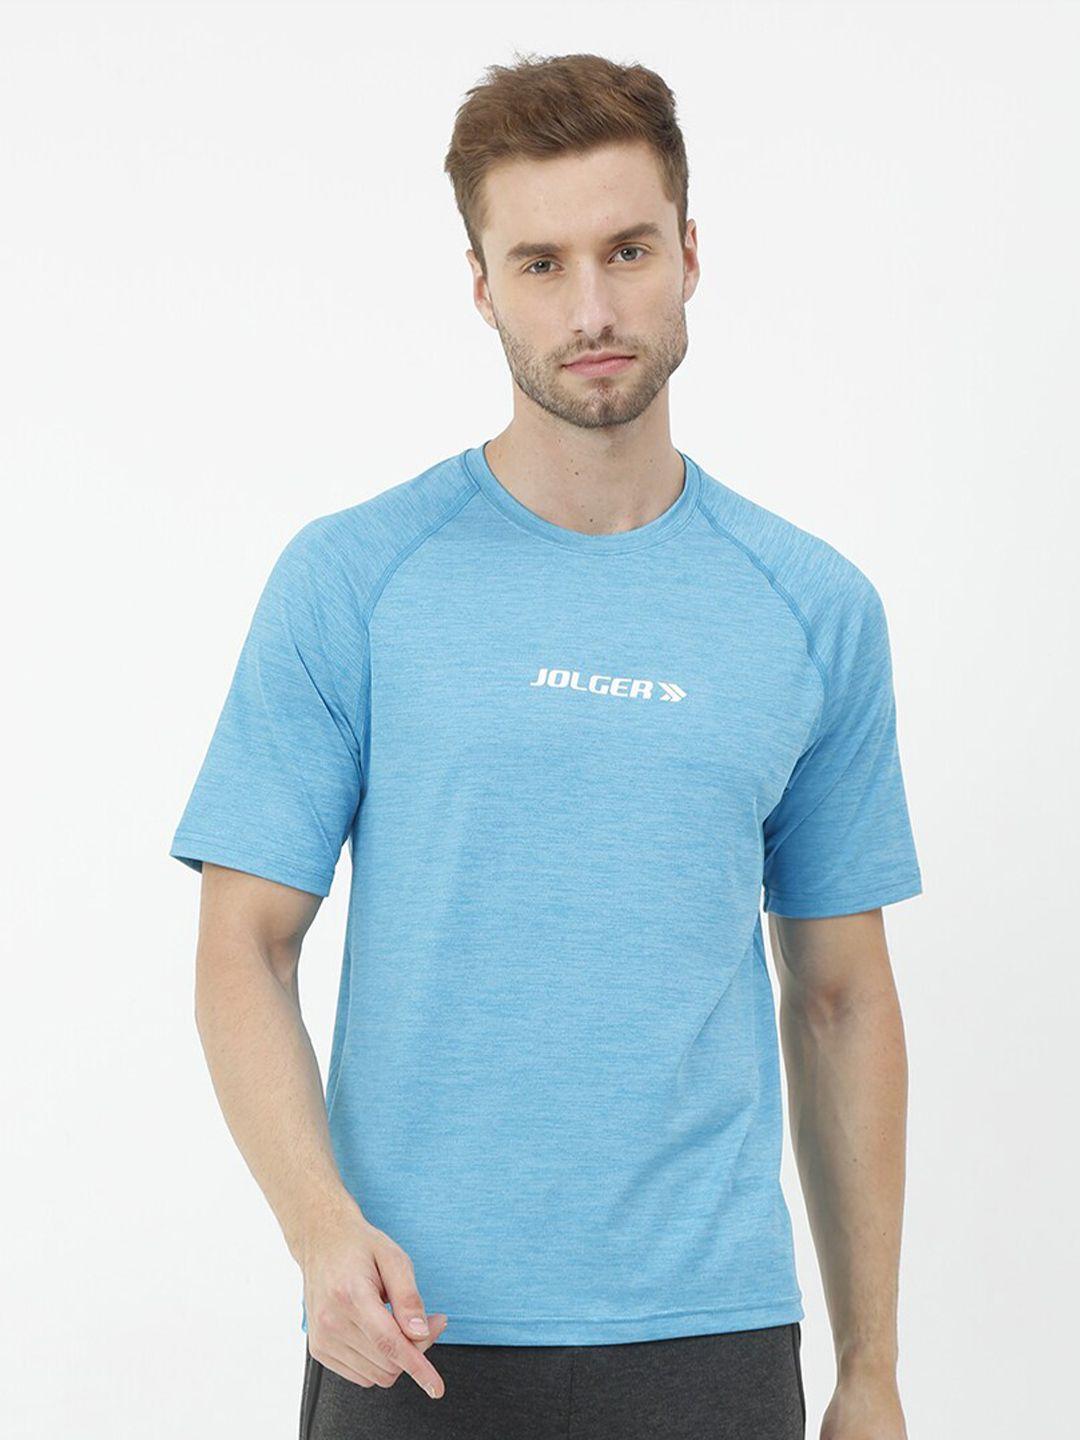 jolger typography printed raglan sleeve rapid dry slim fit sports t-shirt